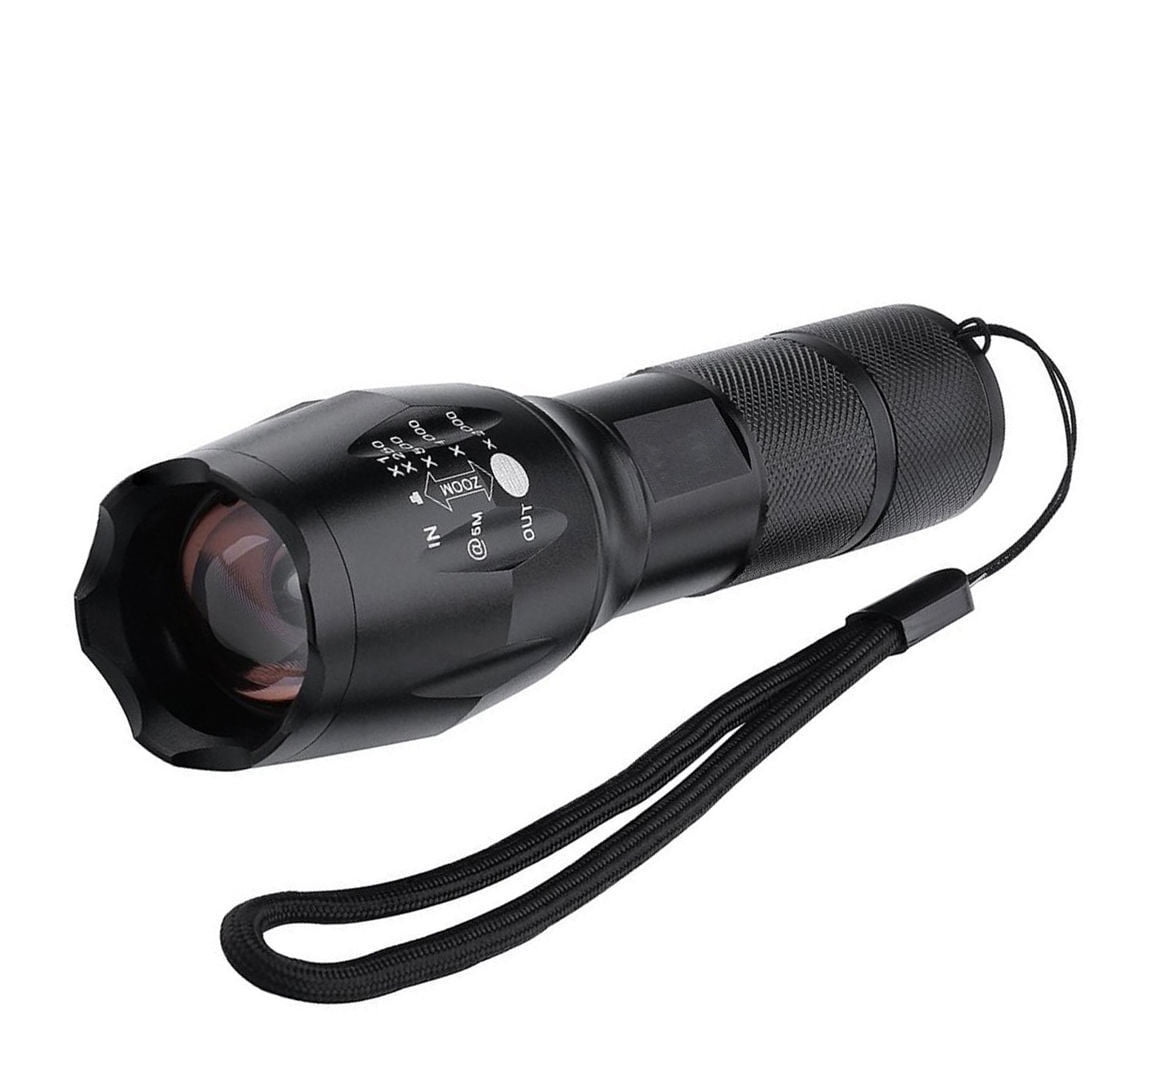 LED Tactical Flashlight Military Grade Torch Small Super Bright Handheld Light 